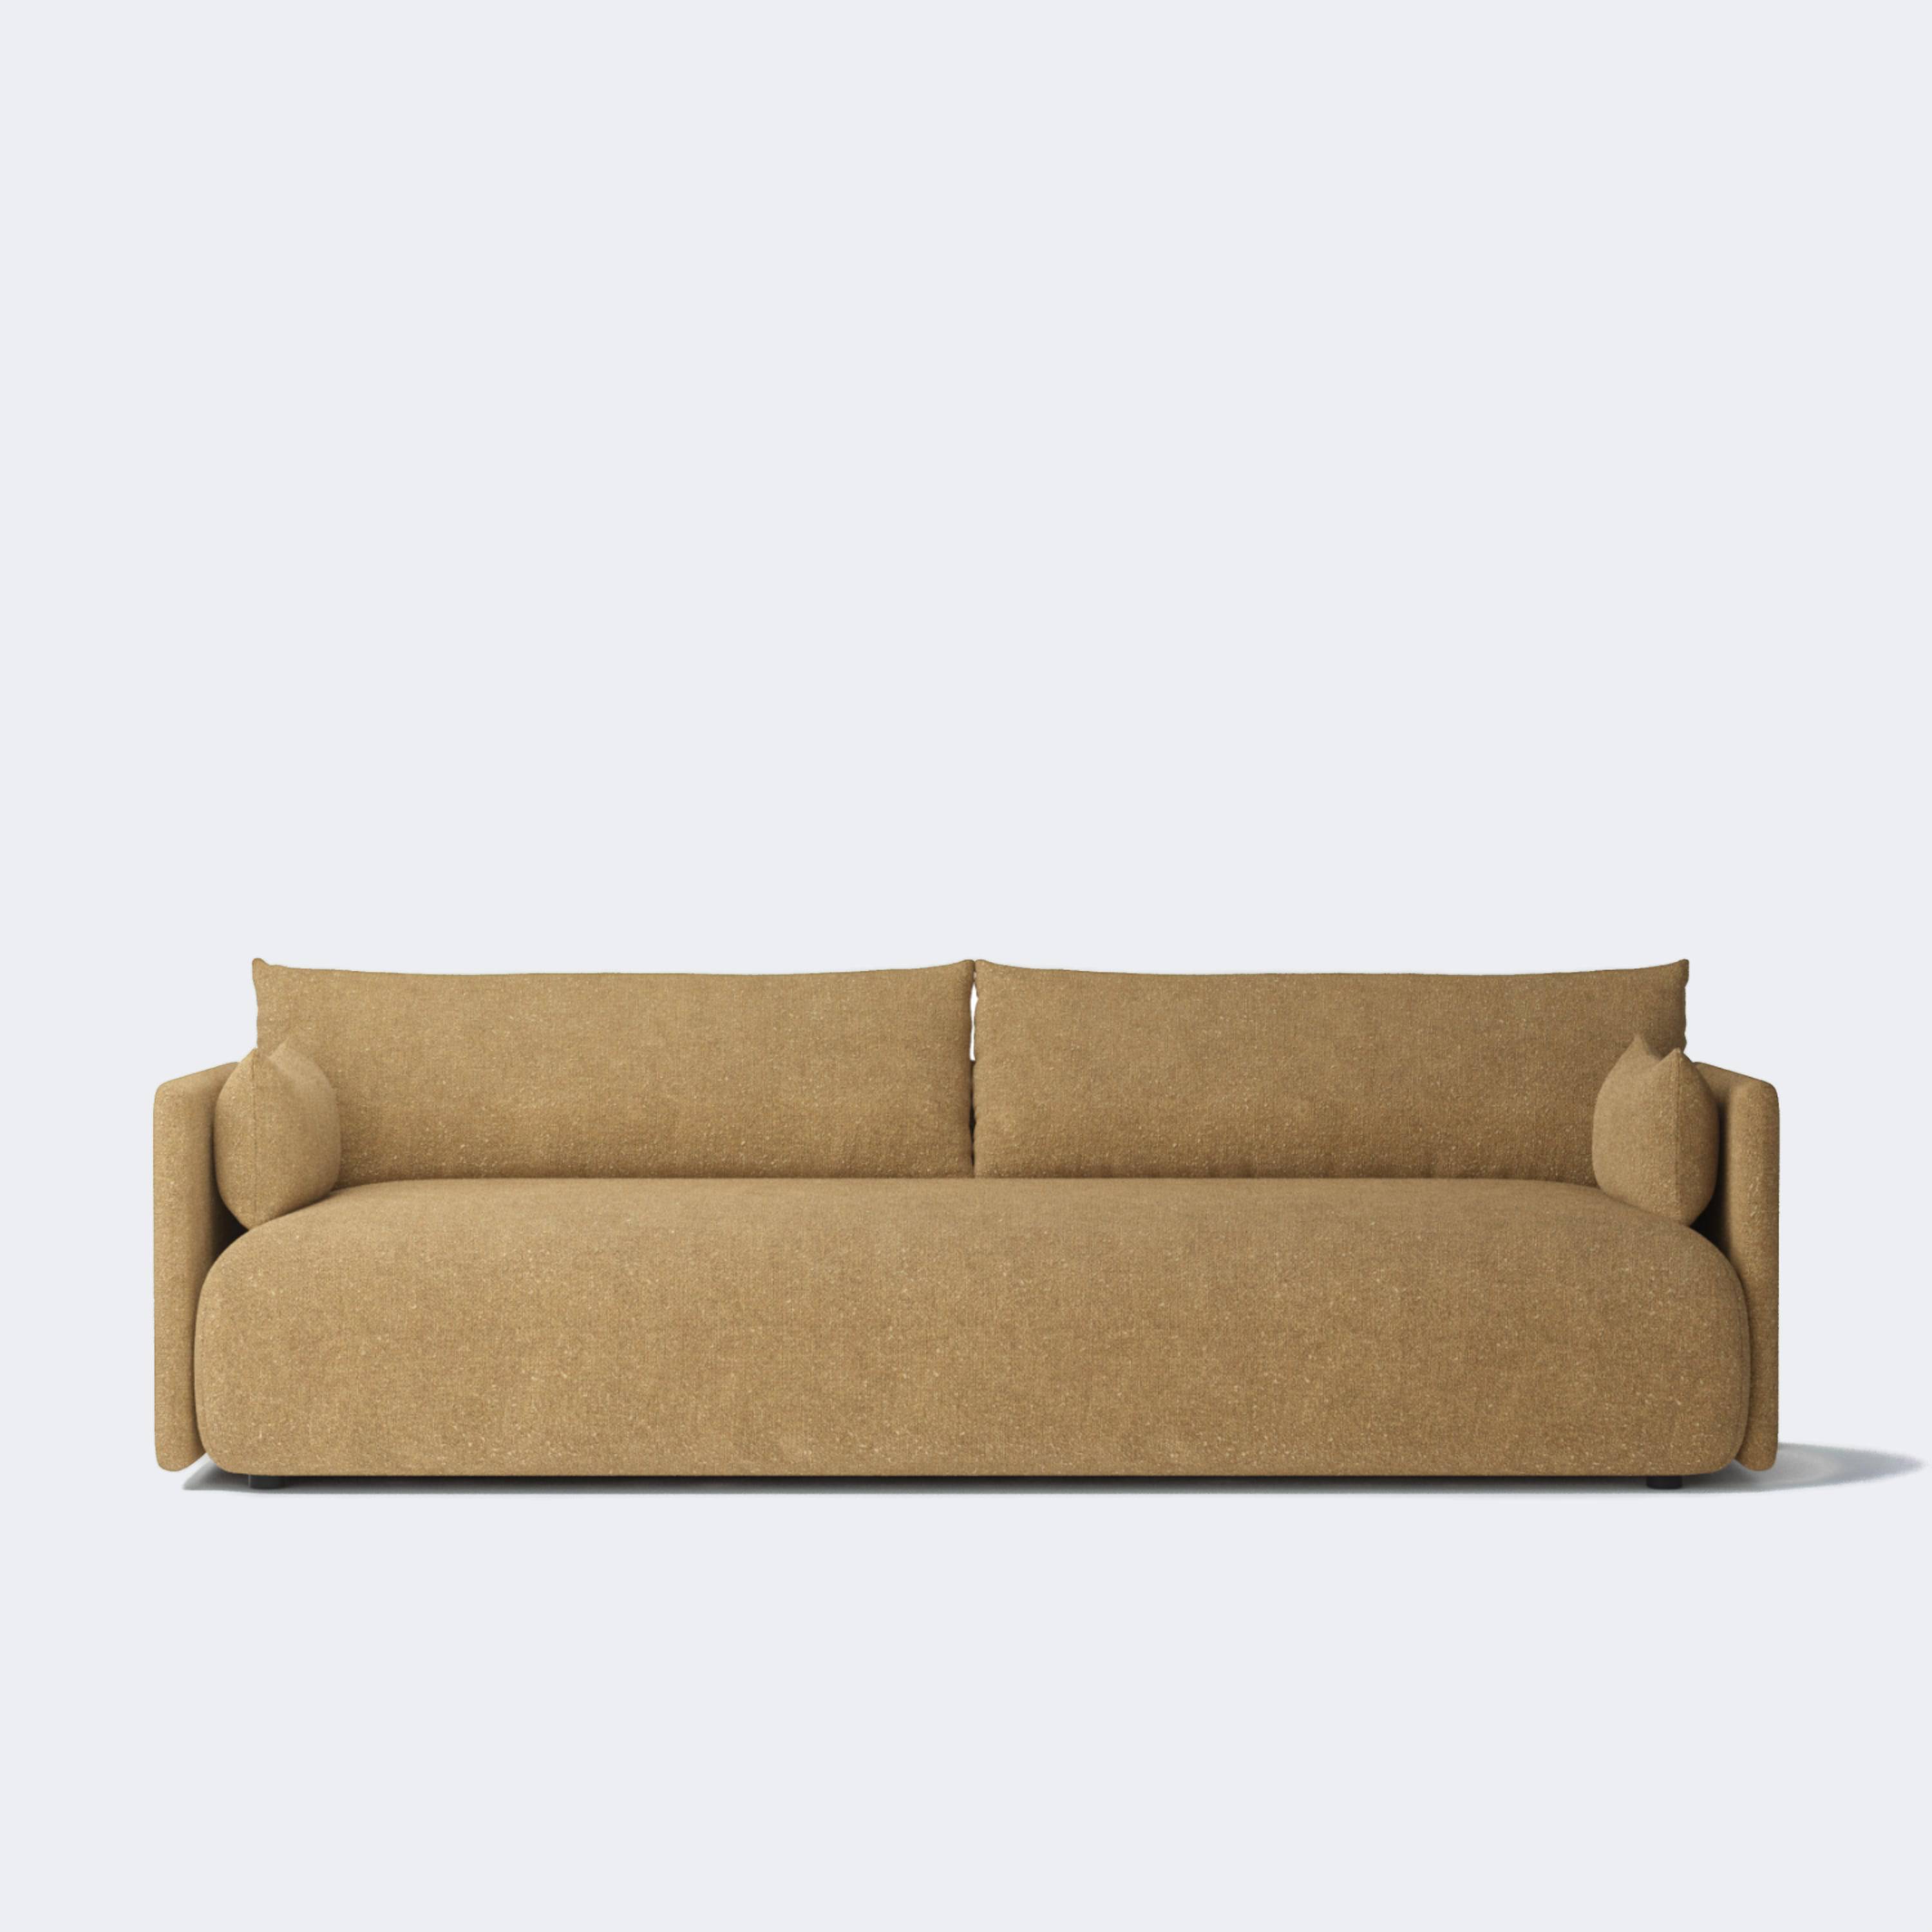 Audo Copenhagen Offset Sofa, 3 Seater Made To Order (10-12 Weeks) Audo Boucle #06 (Gold) - KANSO